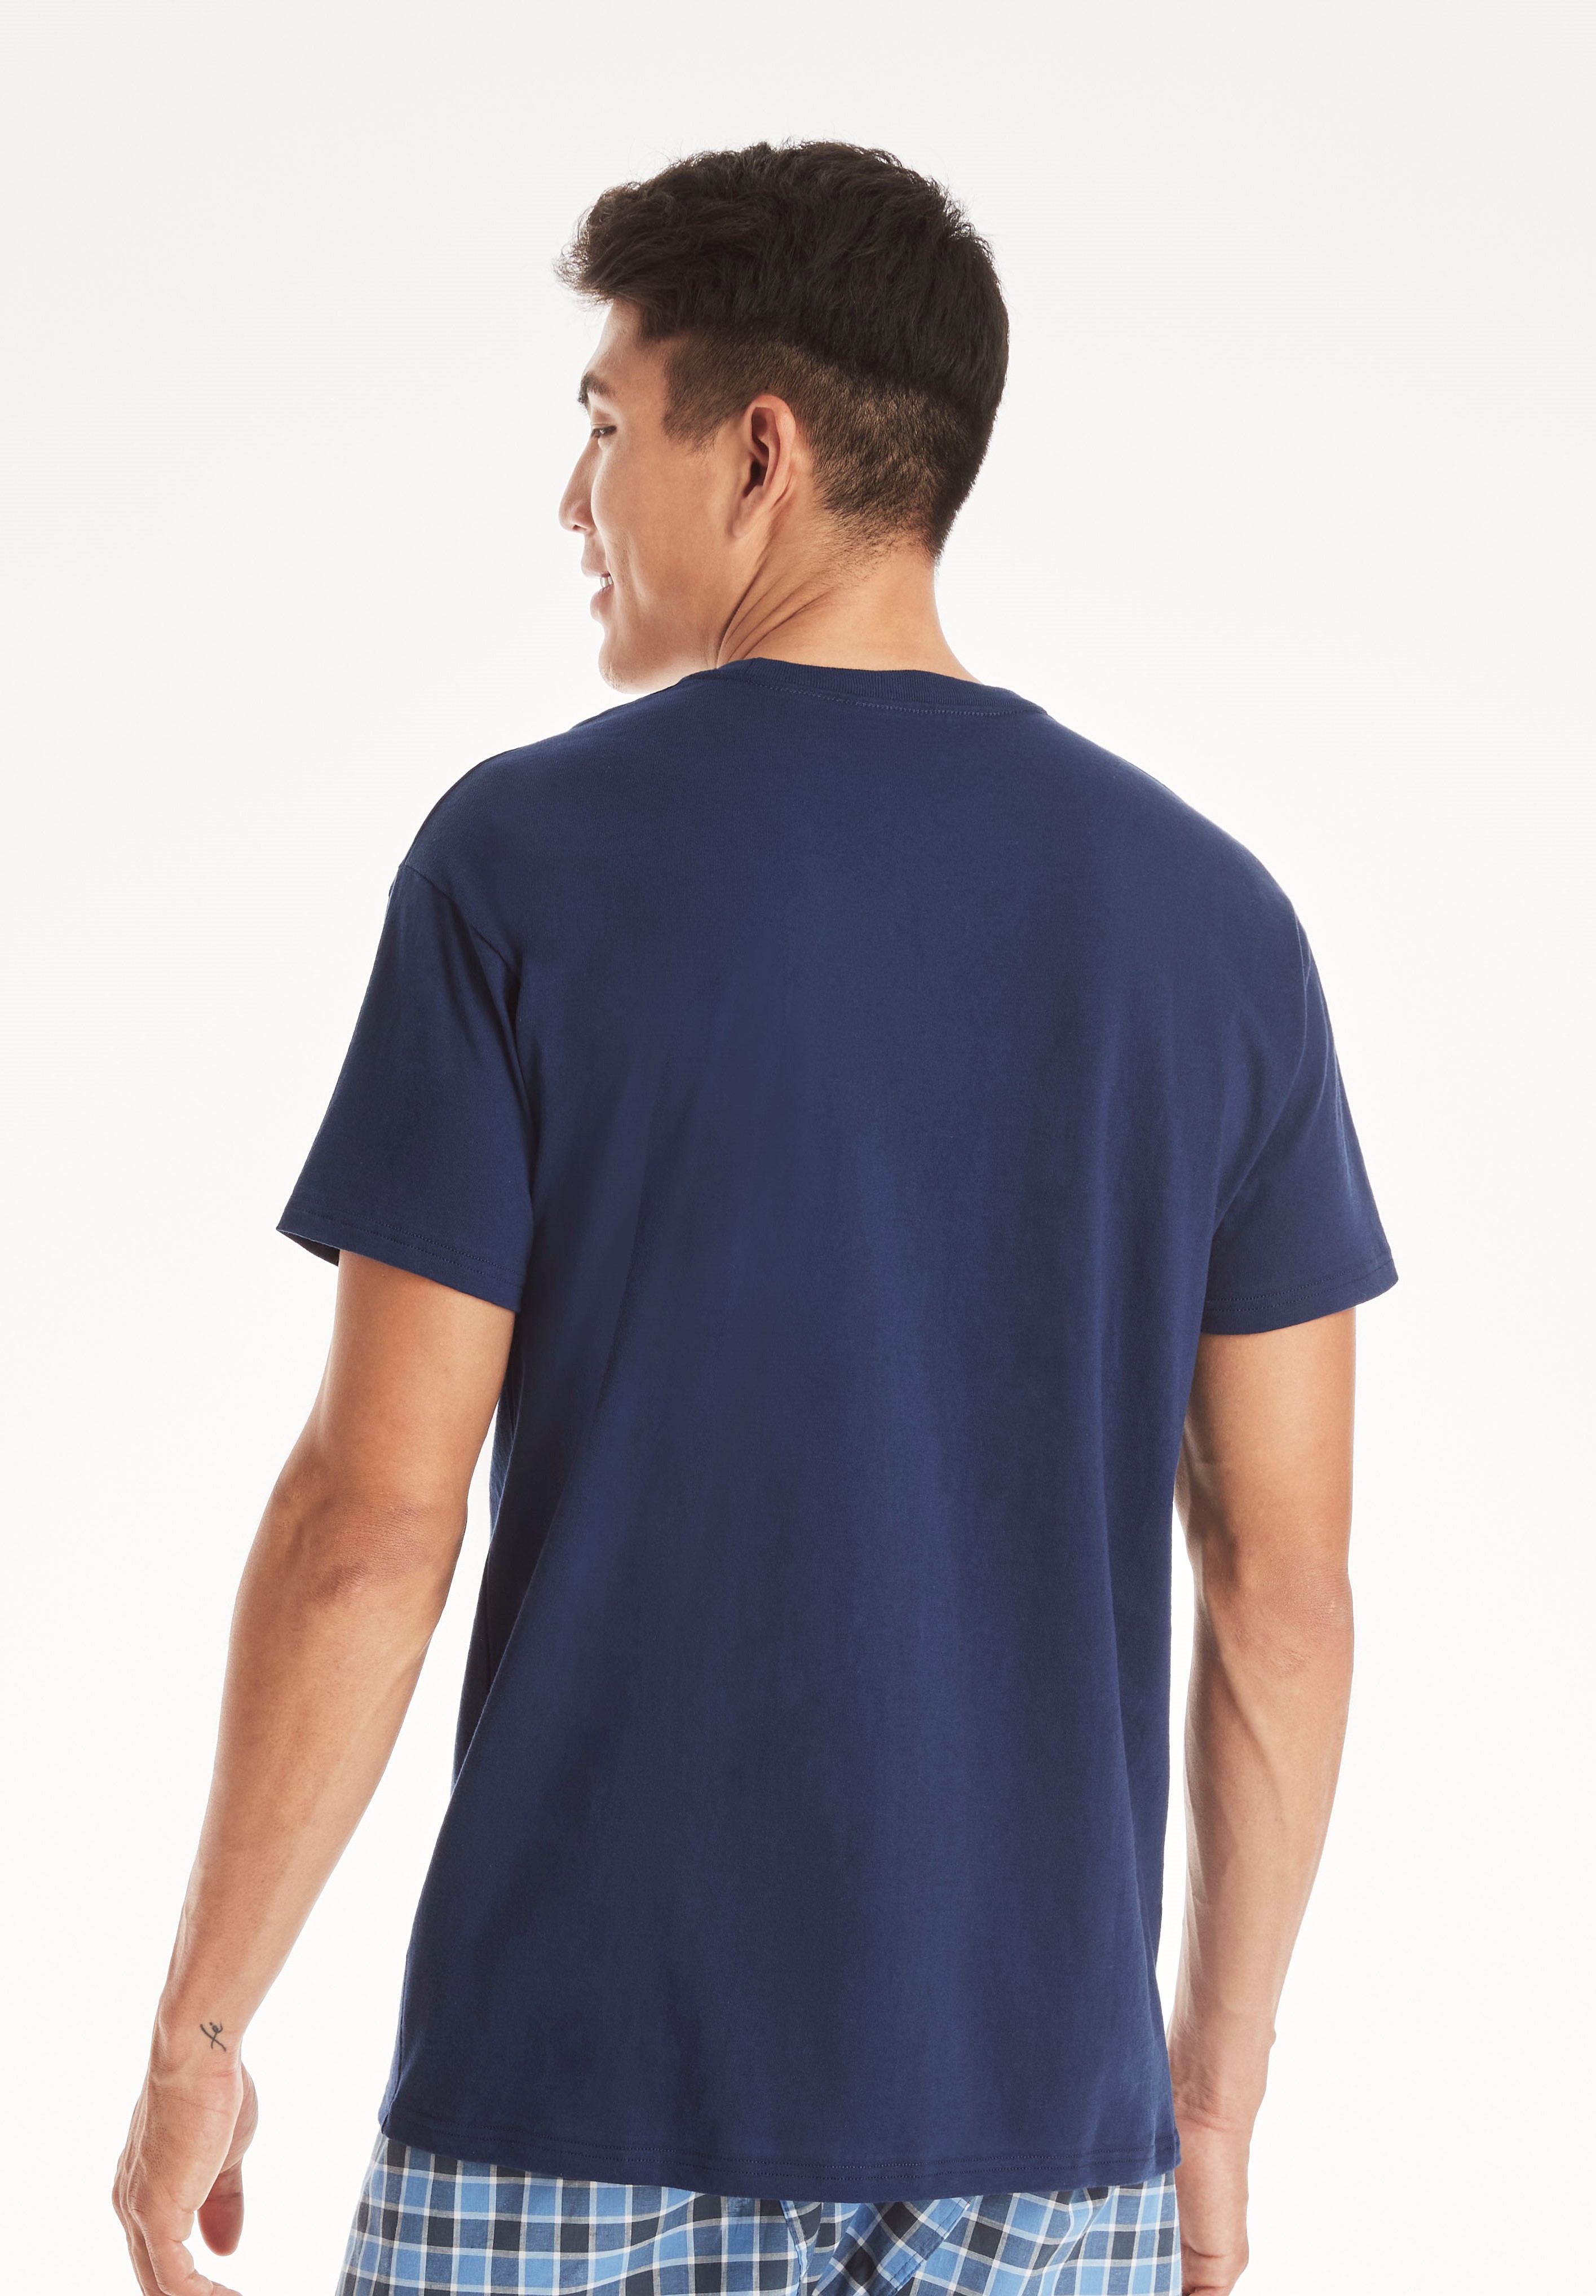 Hanes Men's Value Pack Assorted Pocket T-Shirt Undershirts, 6 Pack ...